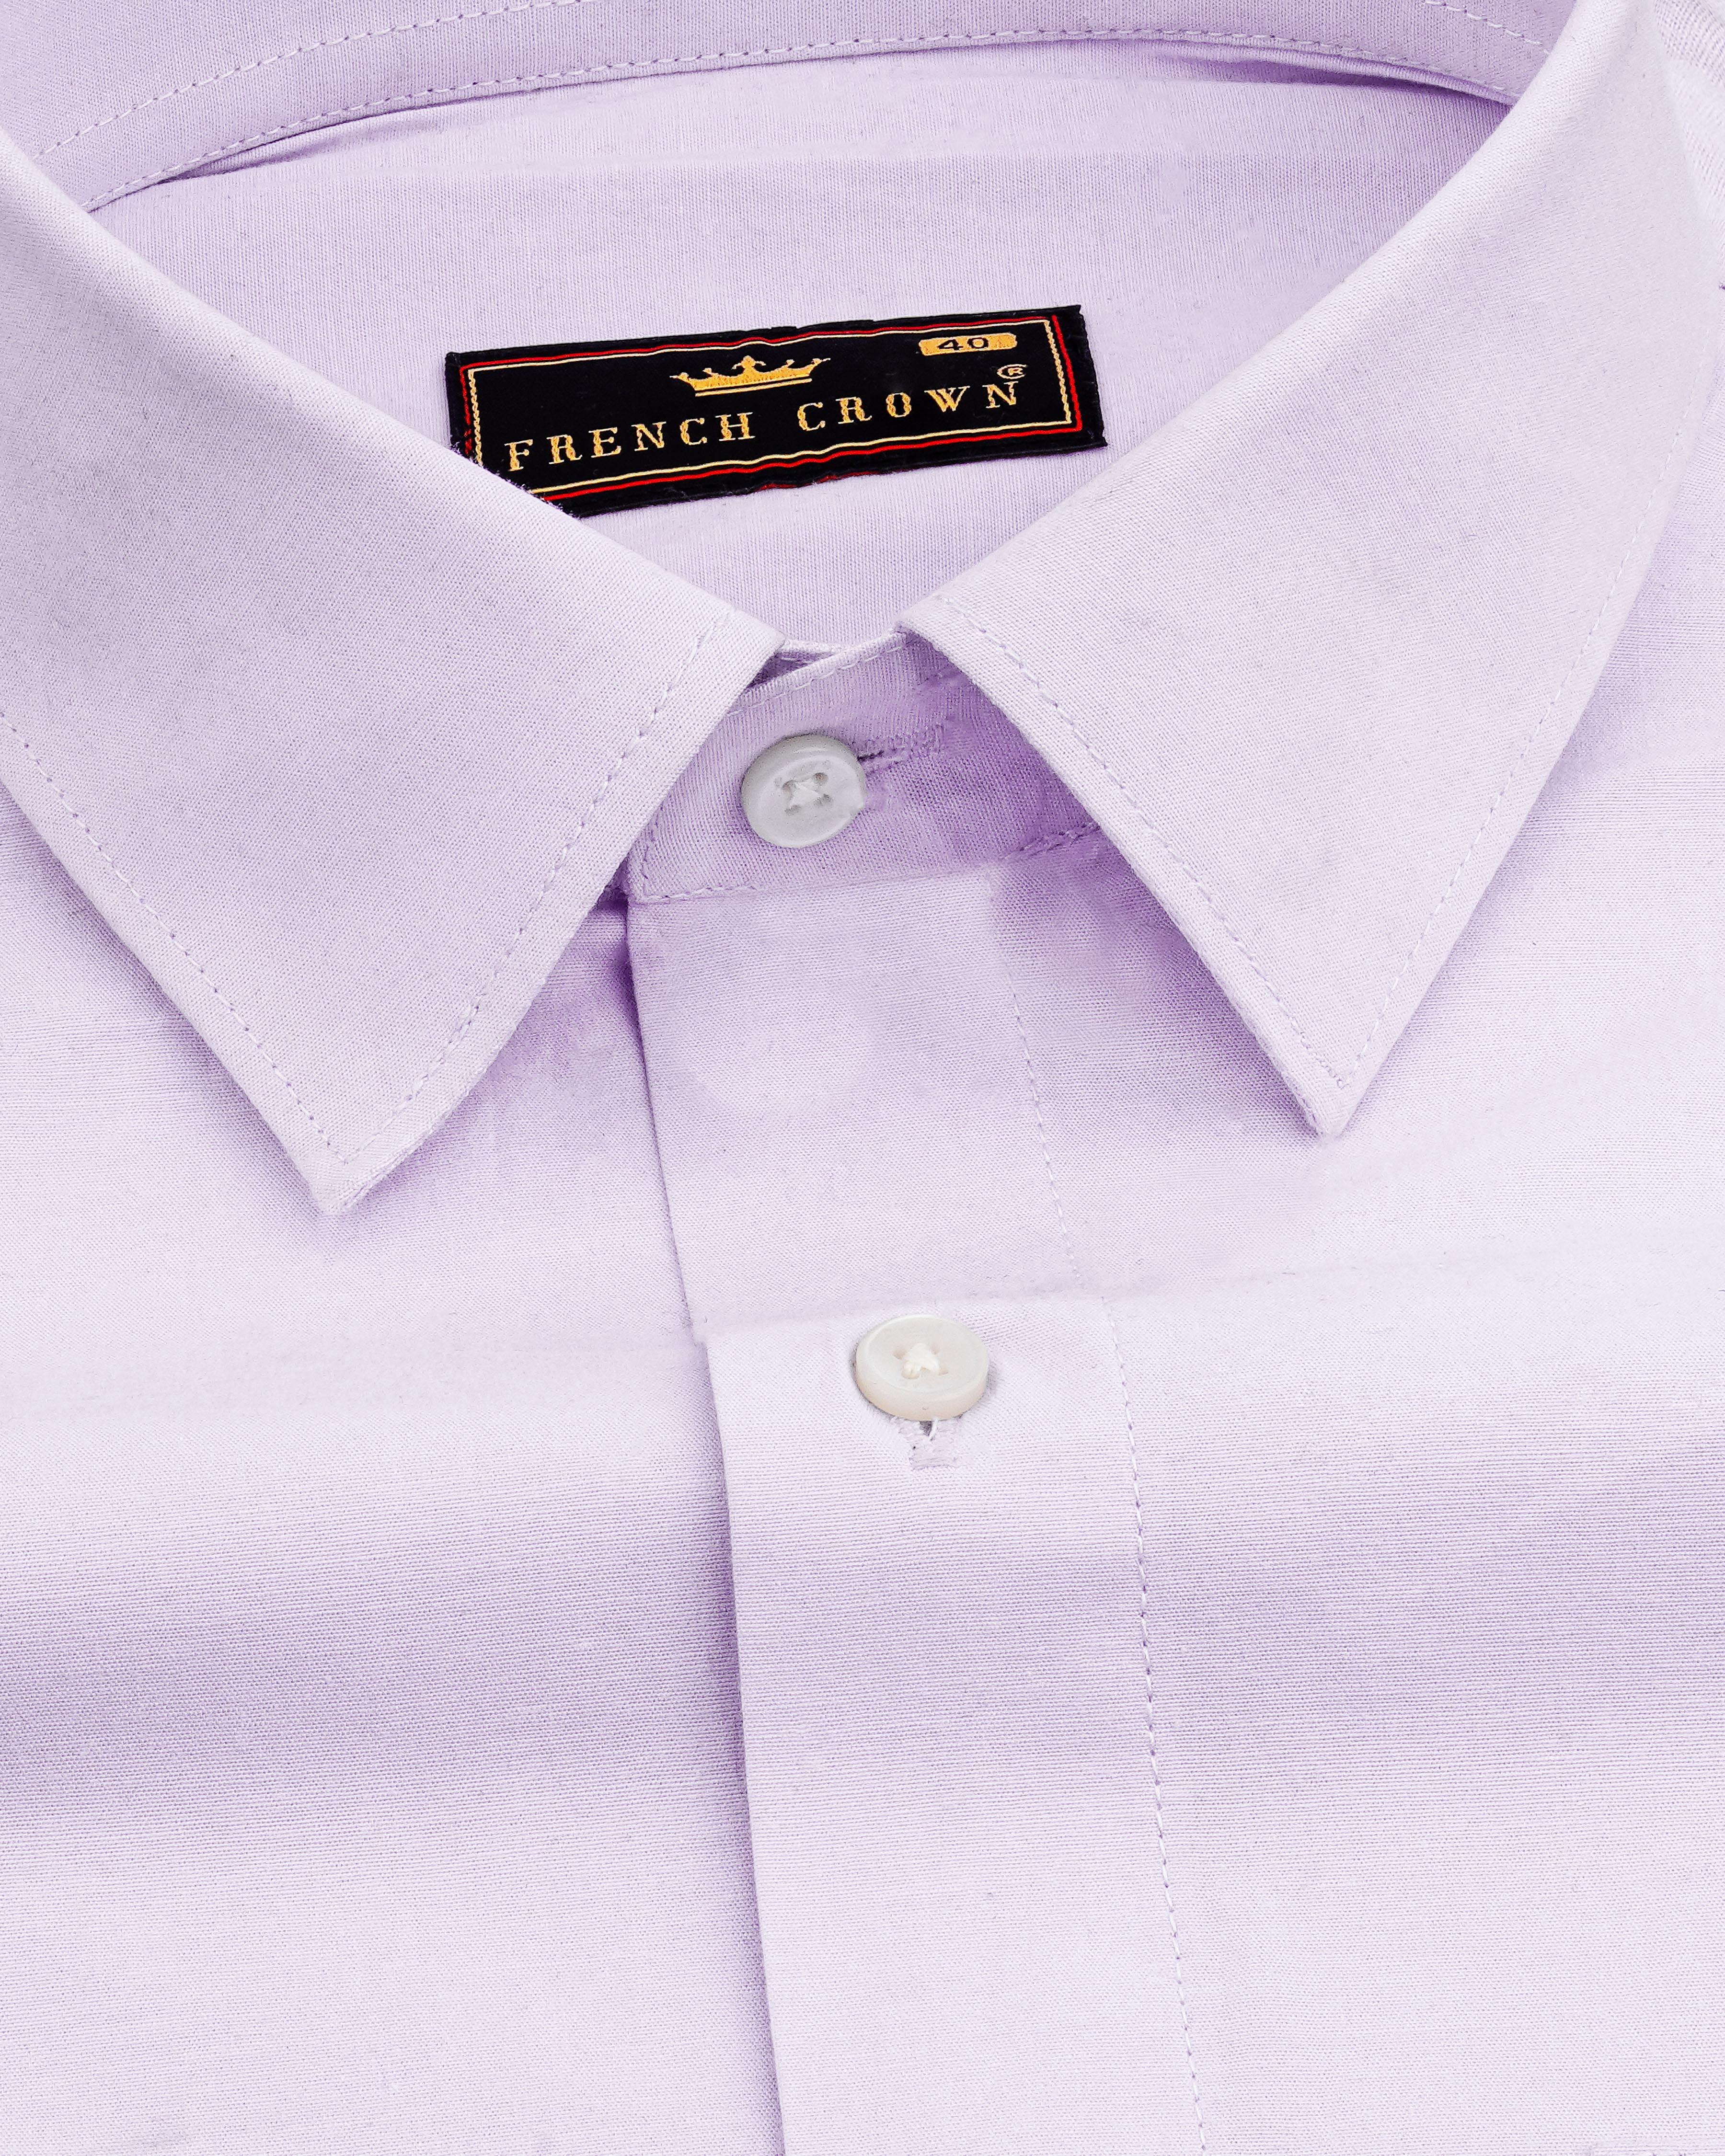 Mercury Purple Premium Cotton Shirt 8380-38, 8380-H-38, 8380-39,8380-H-39, 8380-40, 8380-H-40, 8380-42, 8380-H-42, 8380-44, 8380-H-44, 8380-46, 8380-H-46, 8380-48, 8380-H-48, 8380-50, 8380-H-50, 8380-52, 8380-H-52